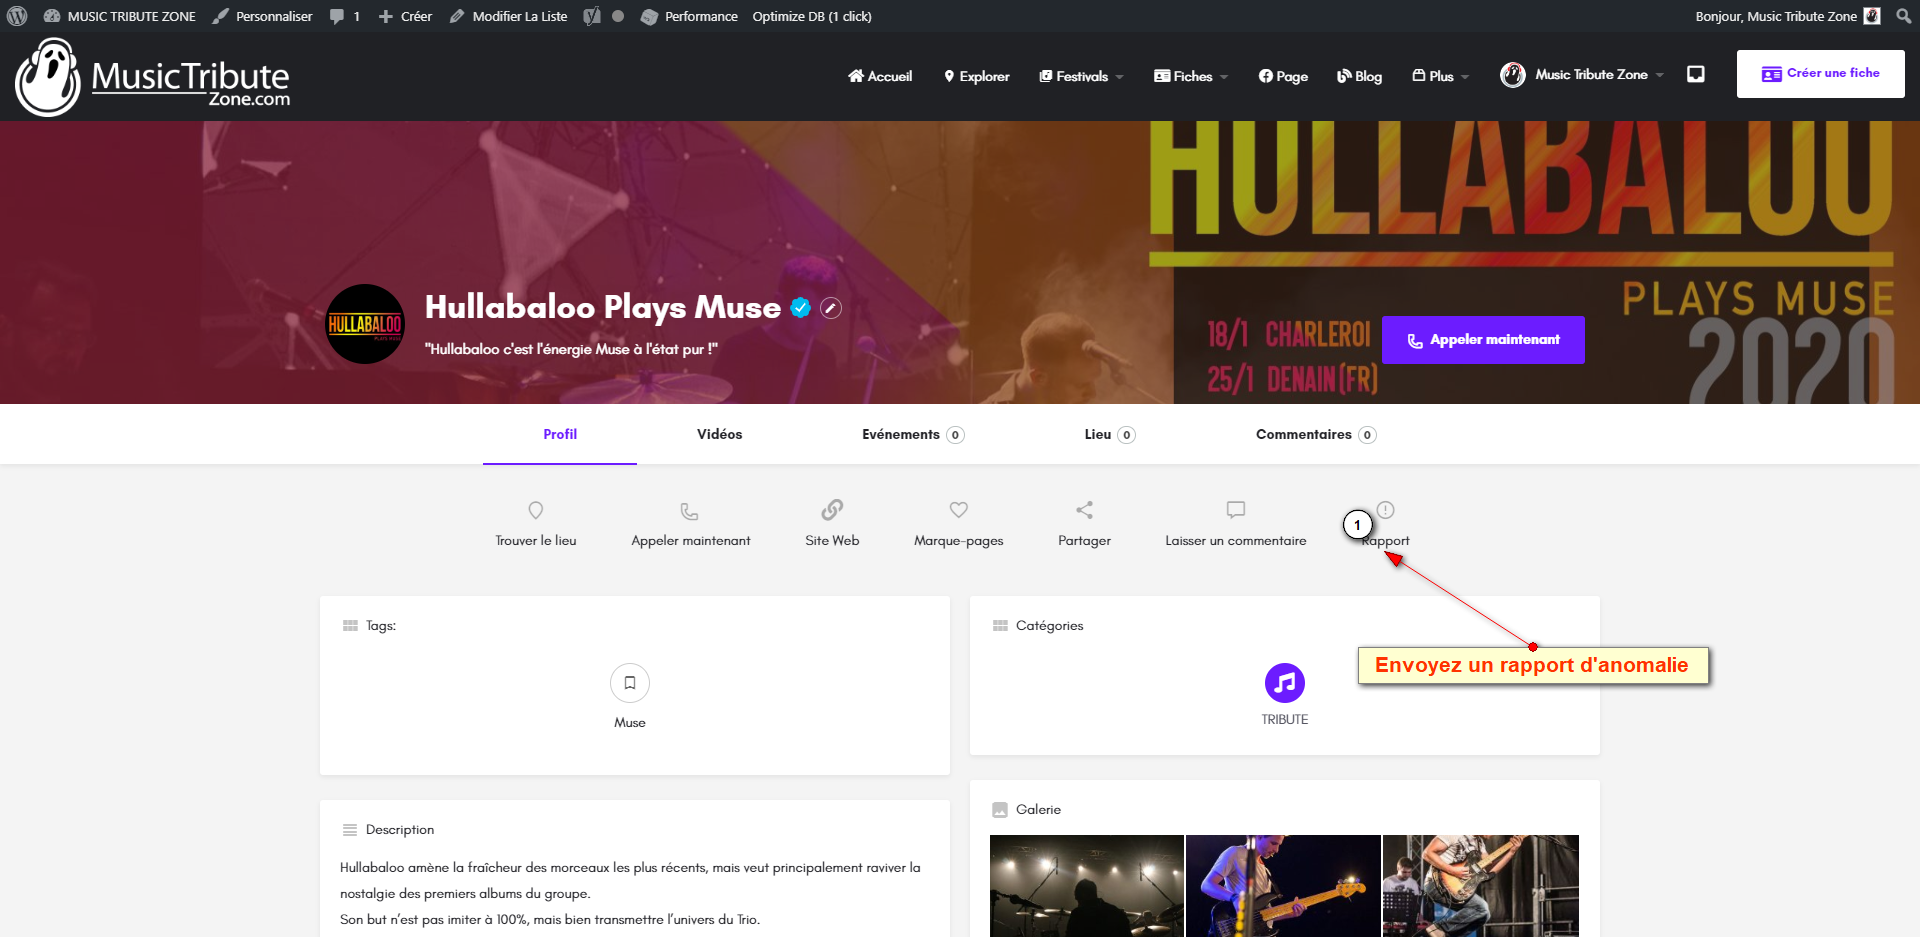 FireShot Pro Screen Capture #016 - 'Hullabaloo Plays Muse I MUSIC TRIBUTE ZONE' - music-tribute-zone_com